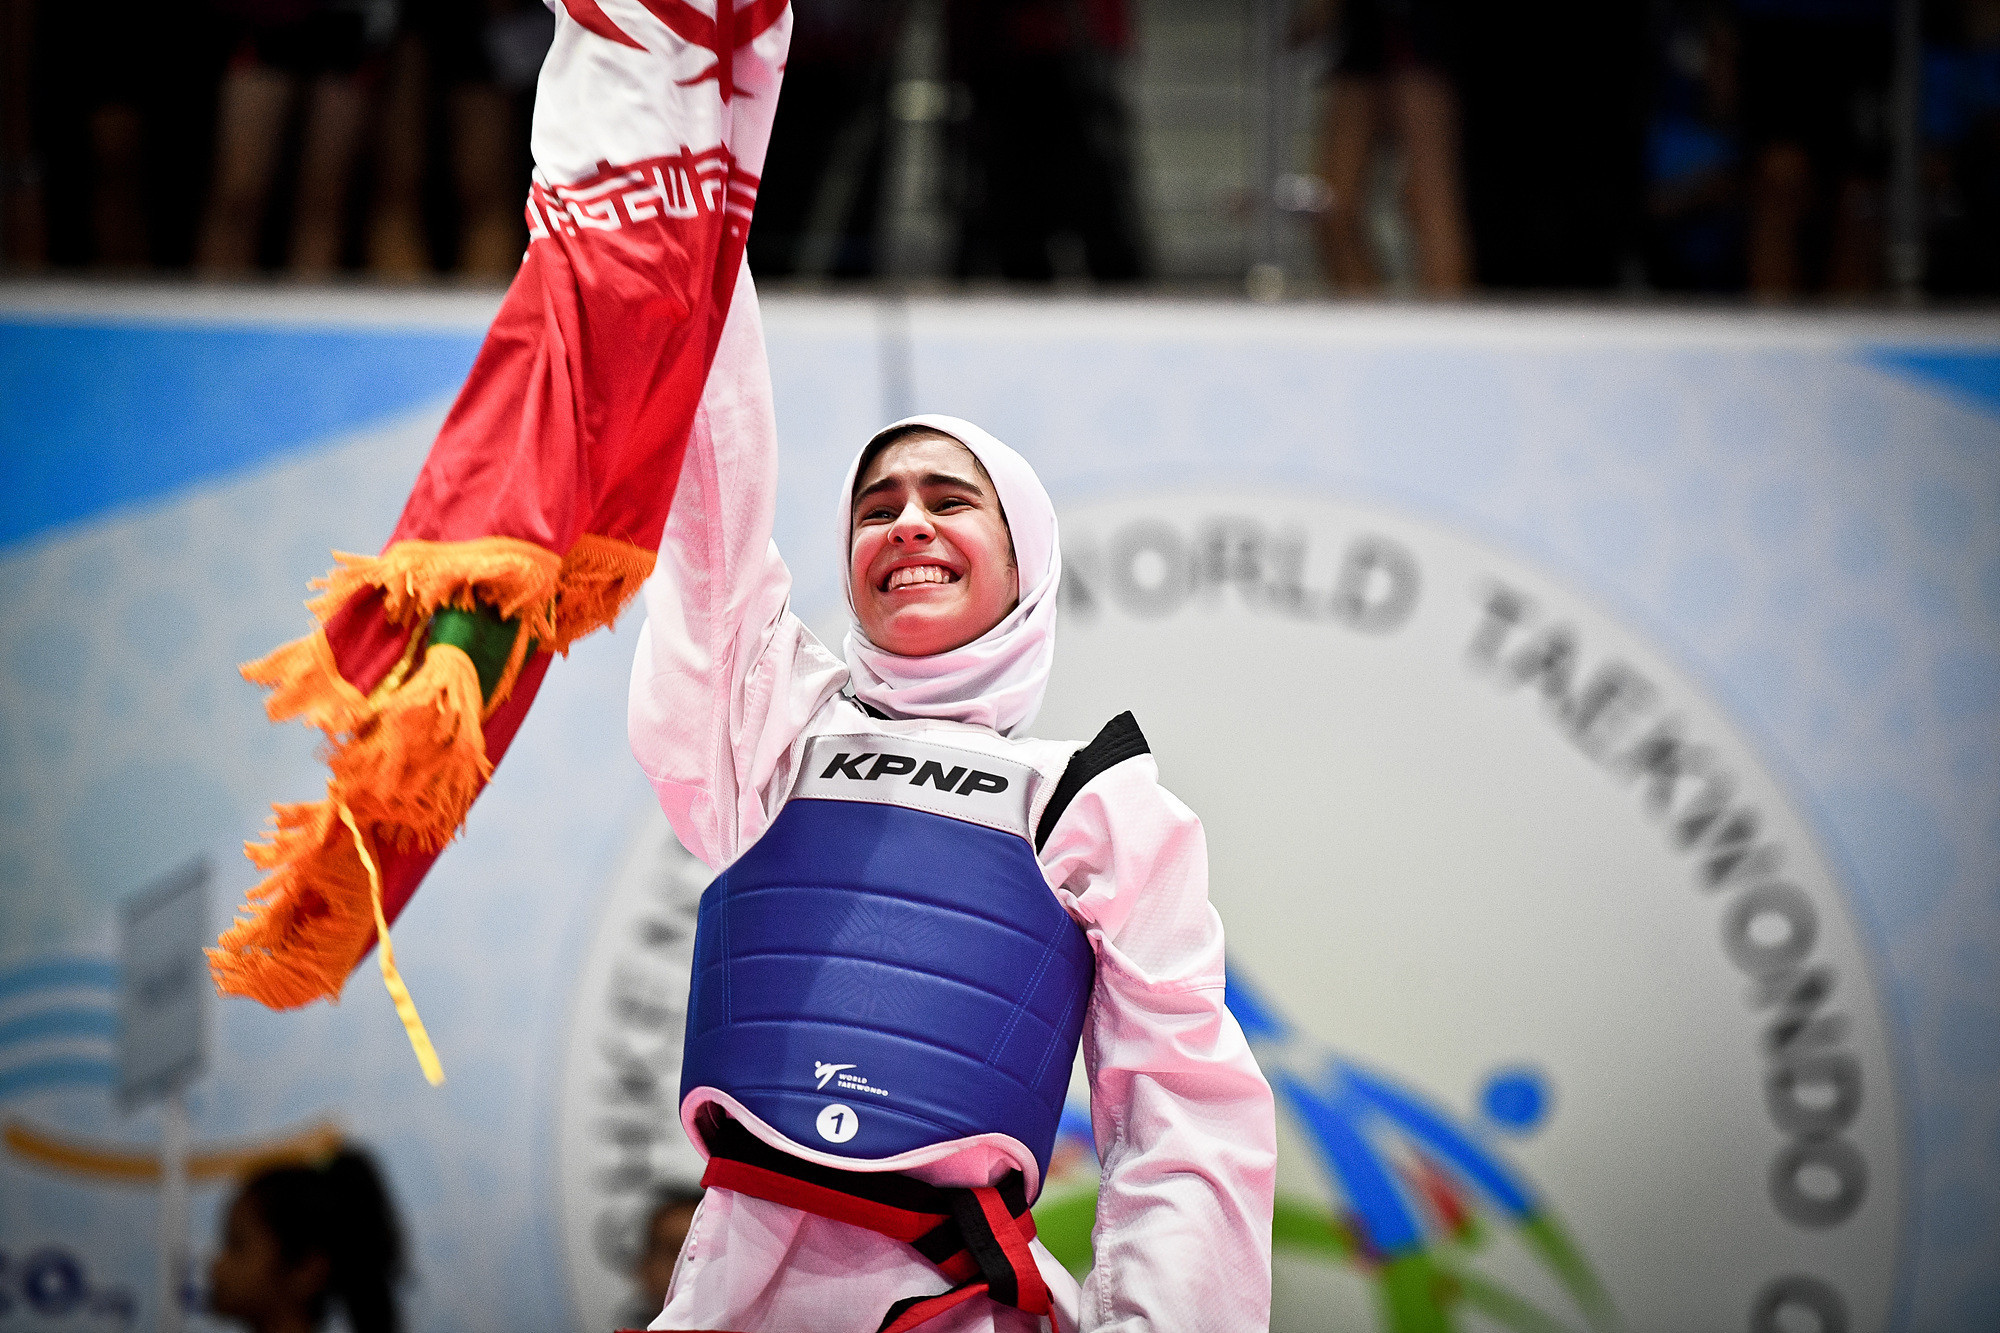 Parnia Salmani won gold in the women's under-37kg final as Iran topped the women's team table in Tashkent ©World Taekwondo